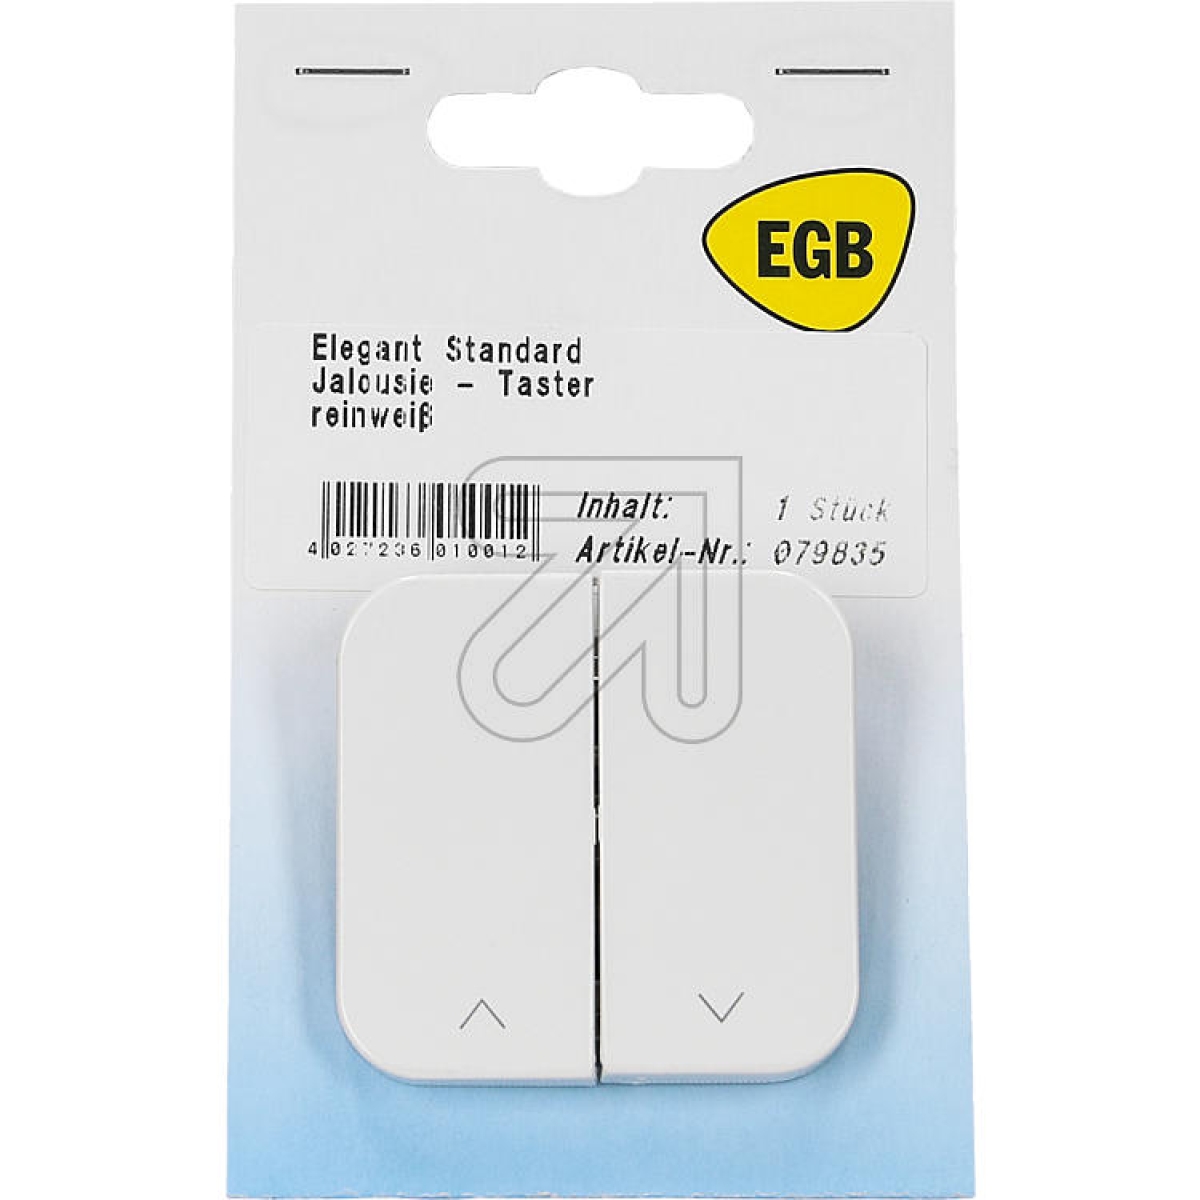 EGBElegant Standard pure white self-service blind buttonArticle-No: 079835